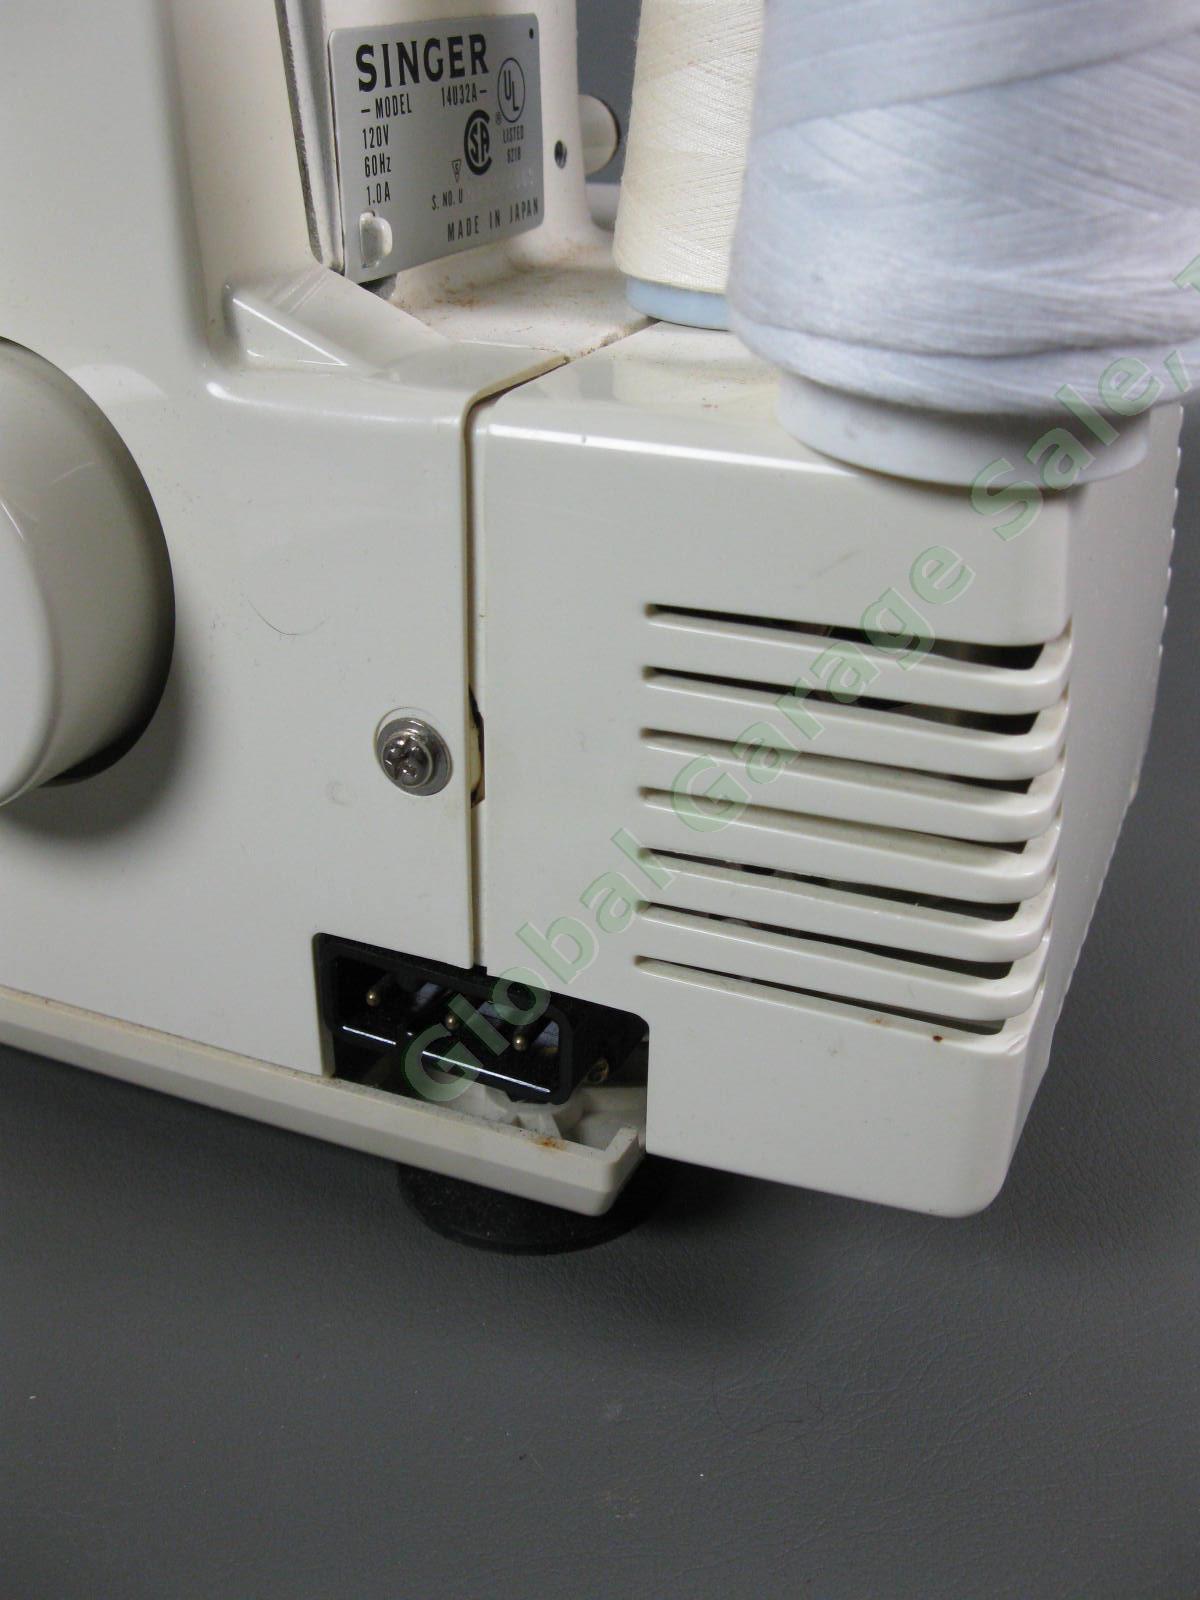 Singer Ultralock 14U32A Serger Sewing Machine Tested Runs Great Pedal Power Cord 5